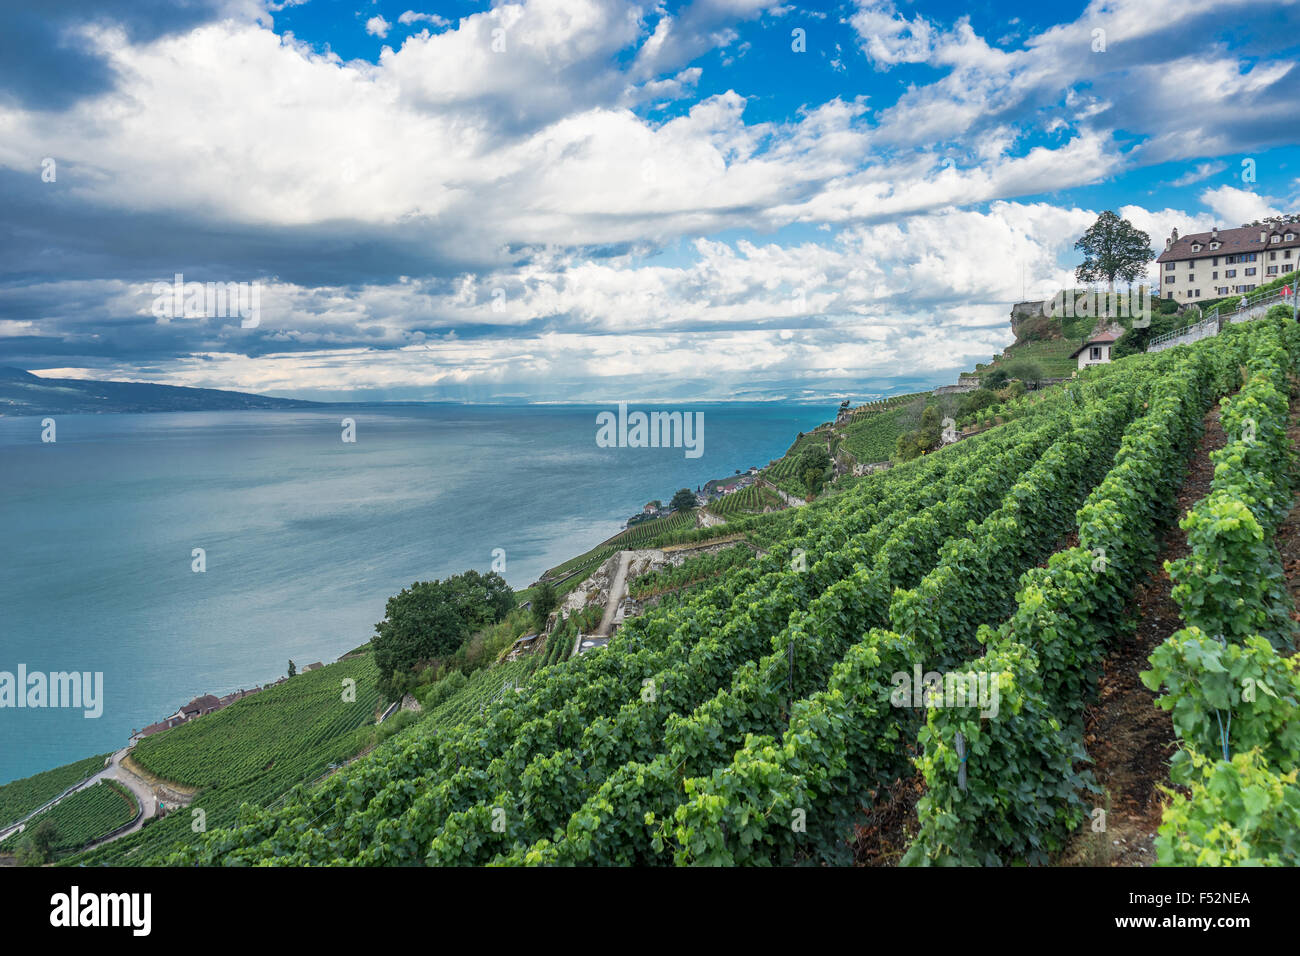 In the vineyards at Lavaux, a UNESCO World Heritage Site. Lake Geneva, Switzerland. Stock Photo